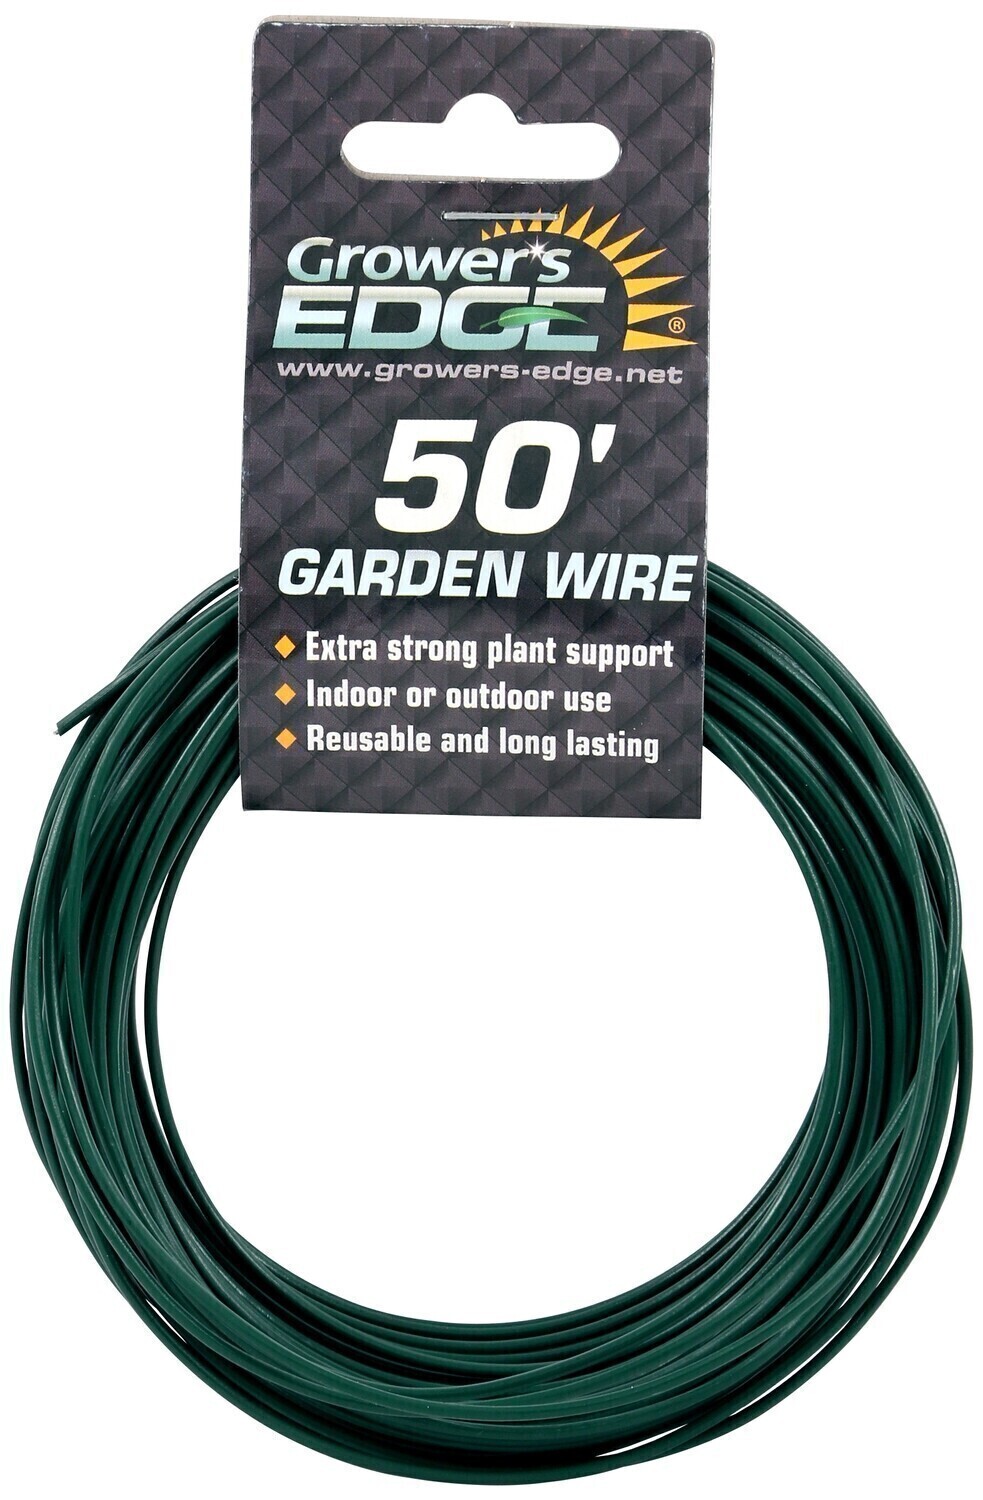 Grower's Edge Wire Ties 50 foot